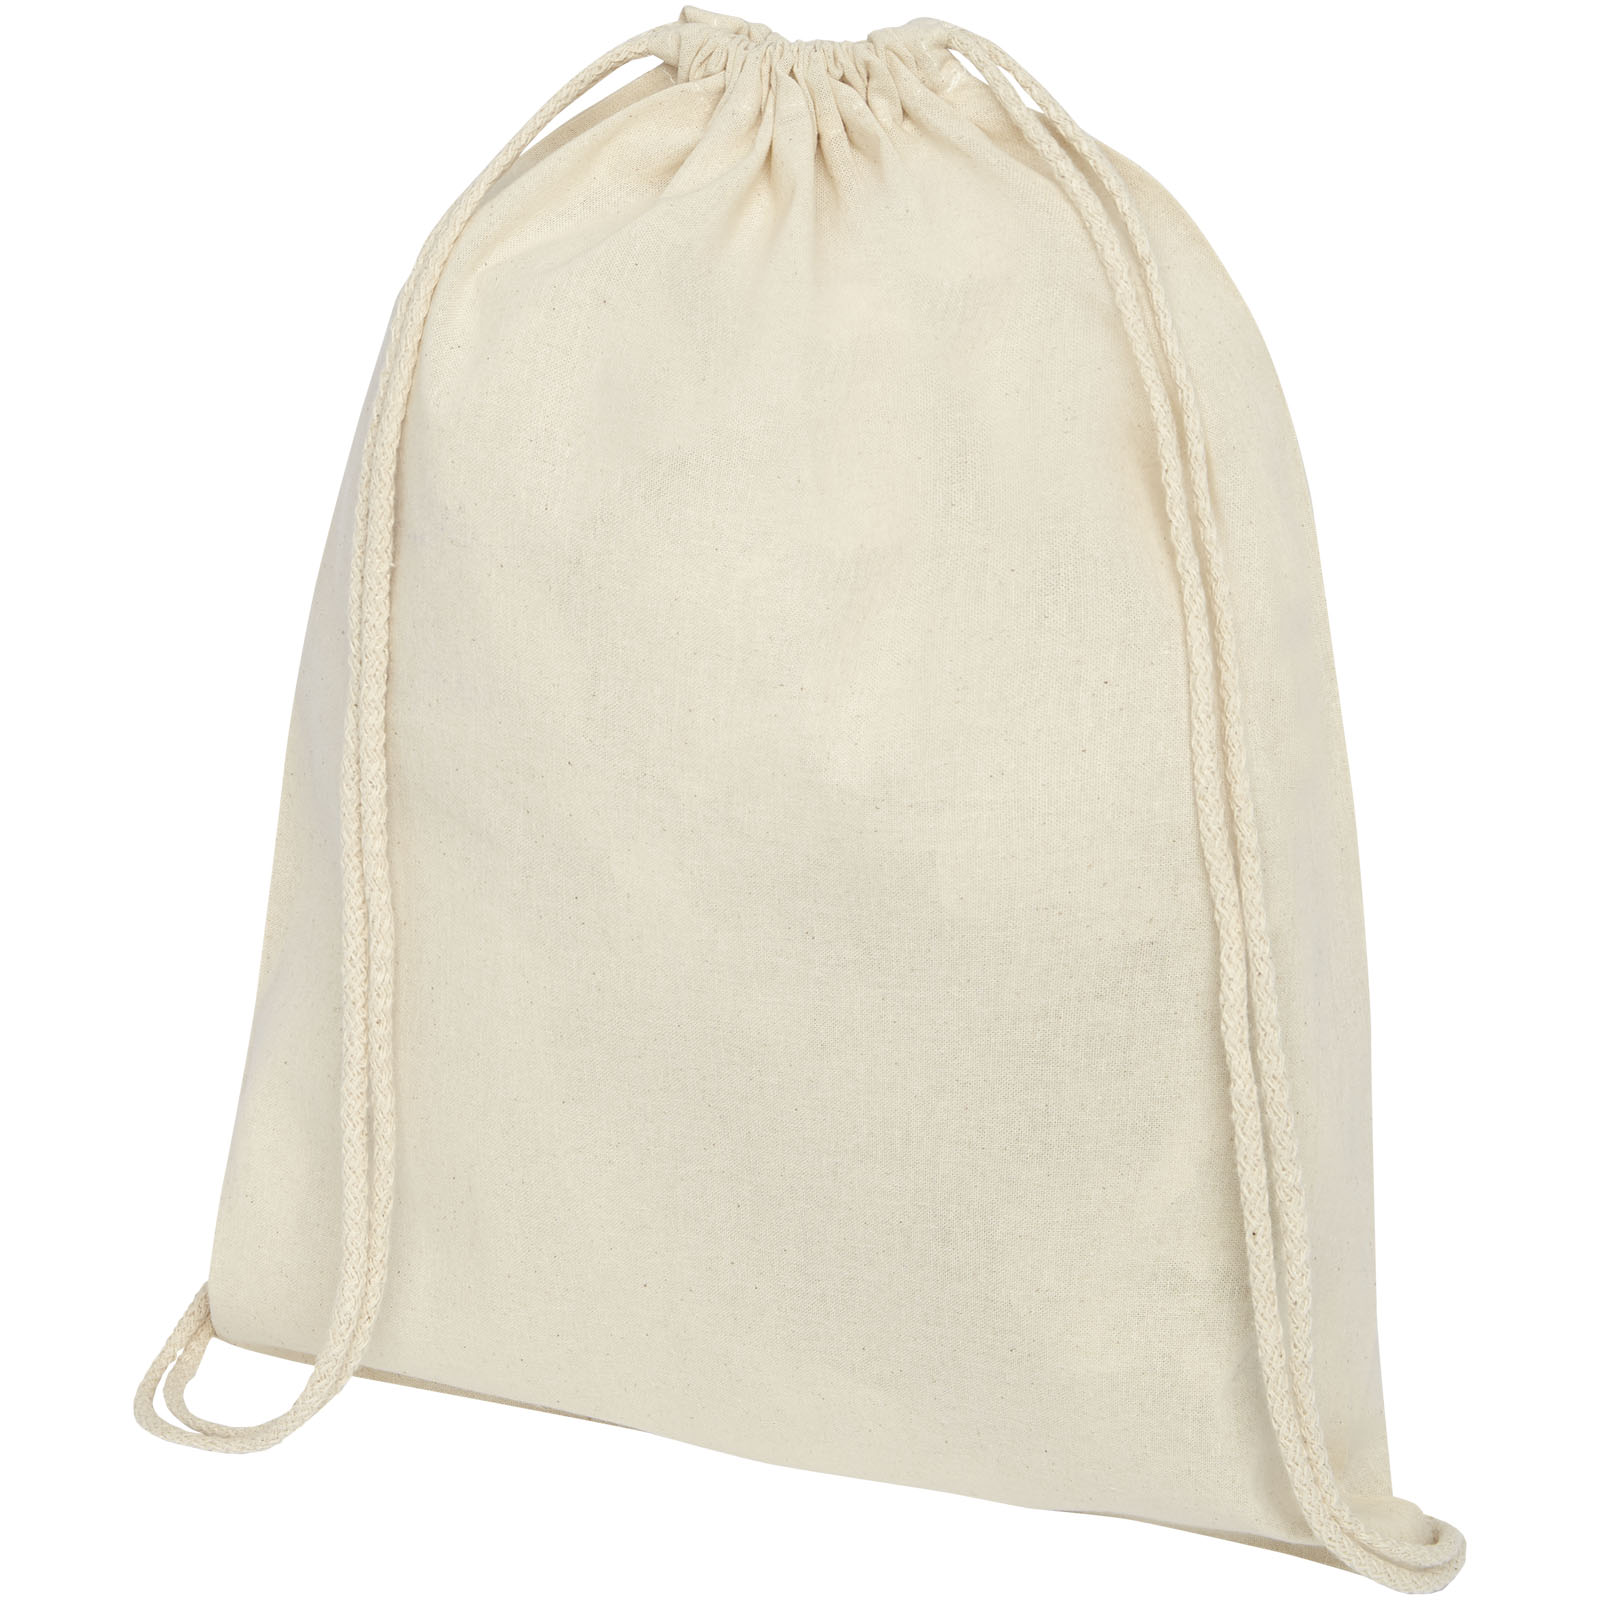 Drawstring Bags - Oregon 100 g/m² cotton drawstring bag 5L